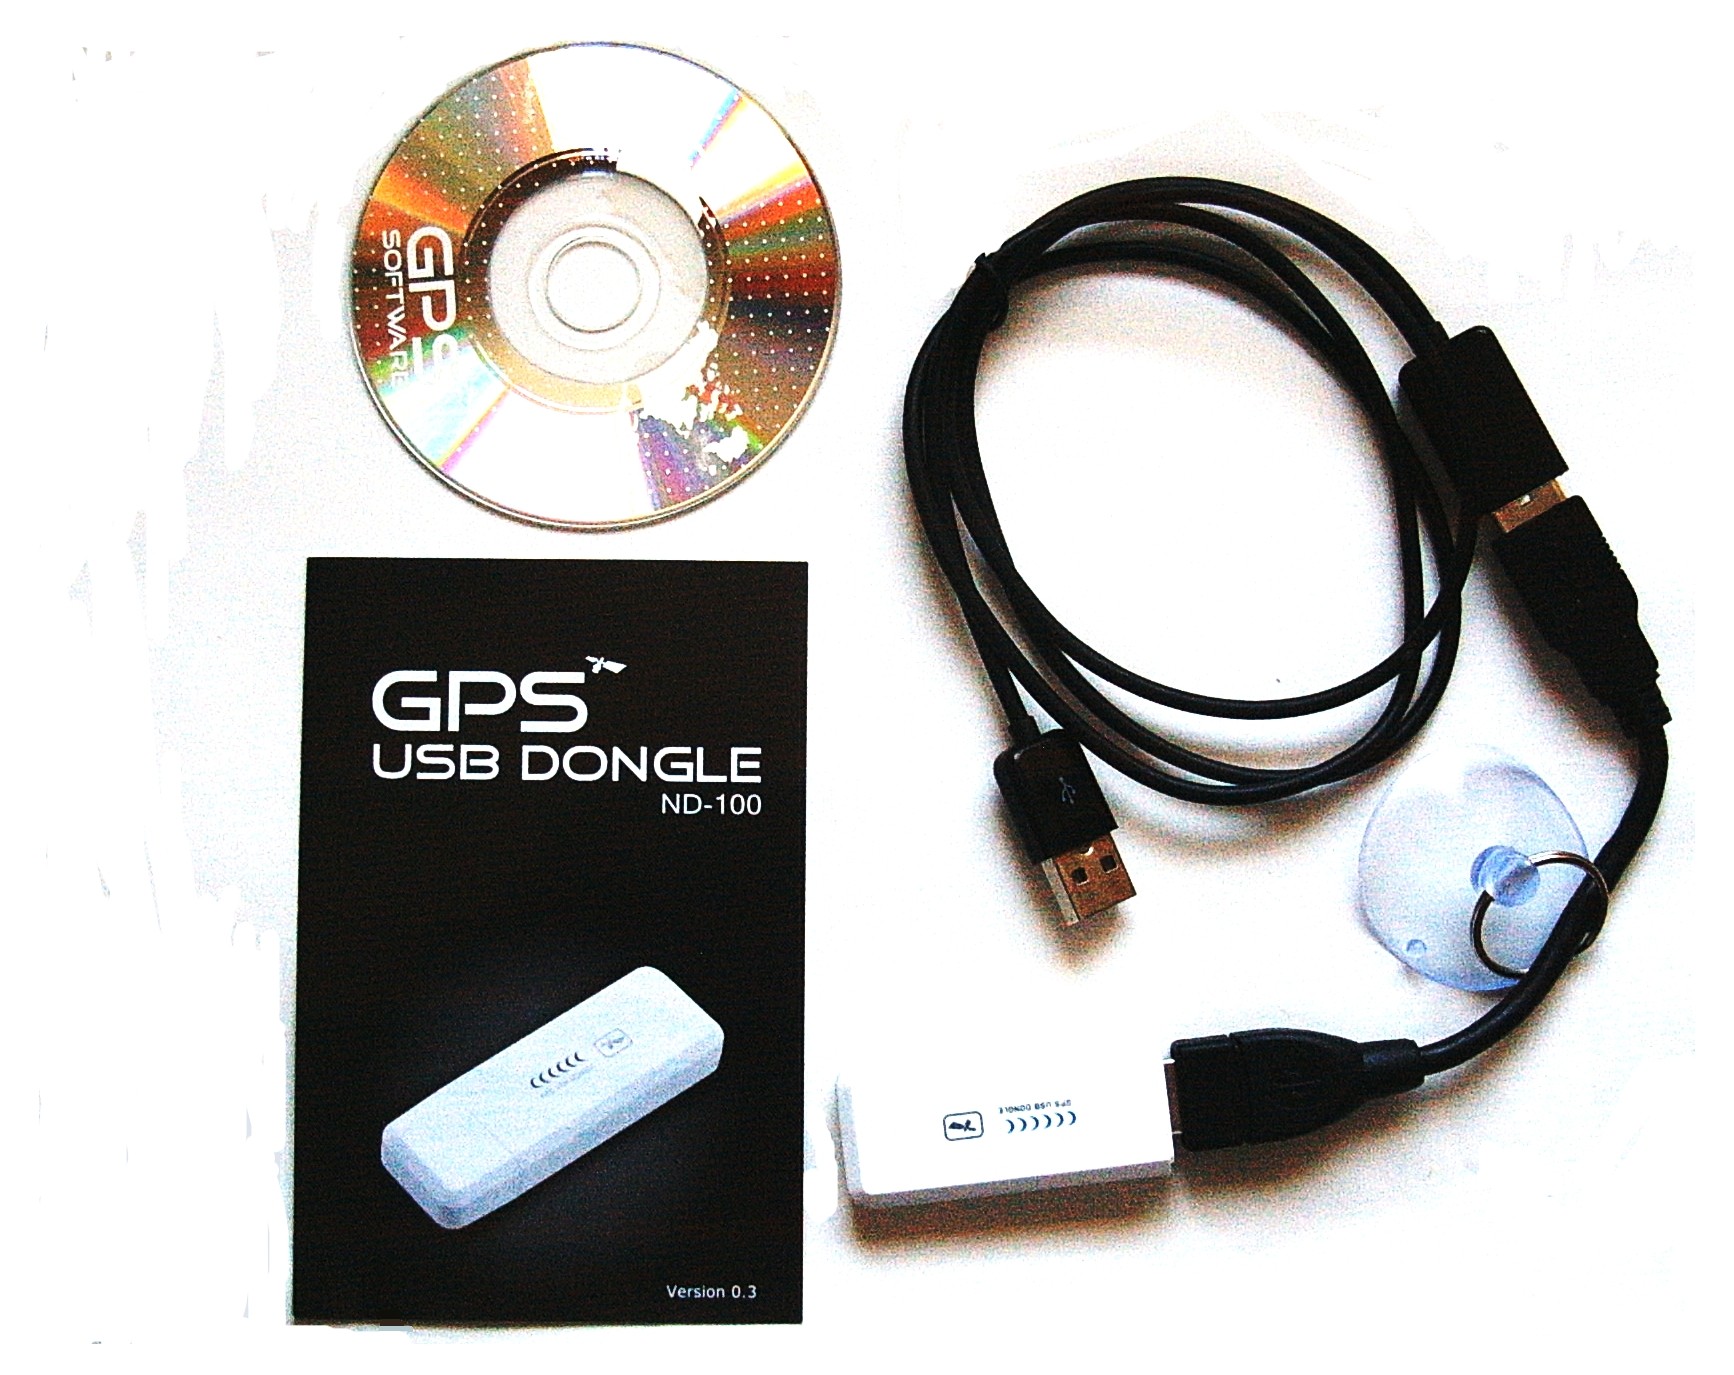 Full GPS navigation accessory kit